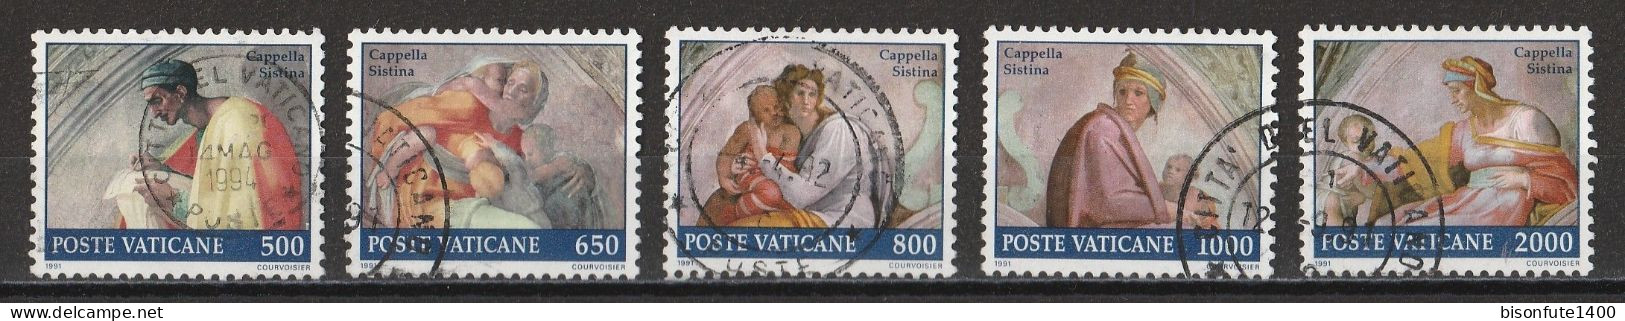 Vatican 1991 : Timbres Yvert & Tellier N° 891 - 892 - 893 - 894 - 895 - 897 - 898 - 899 - 900 Et 901 Oblitérés. - Usados